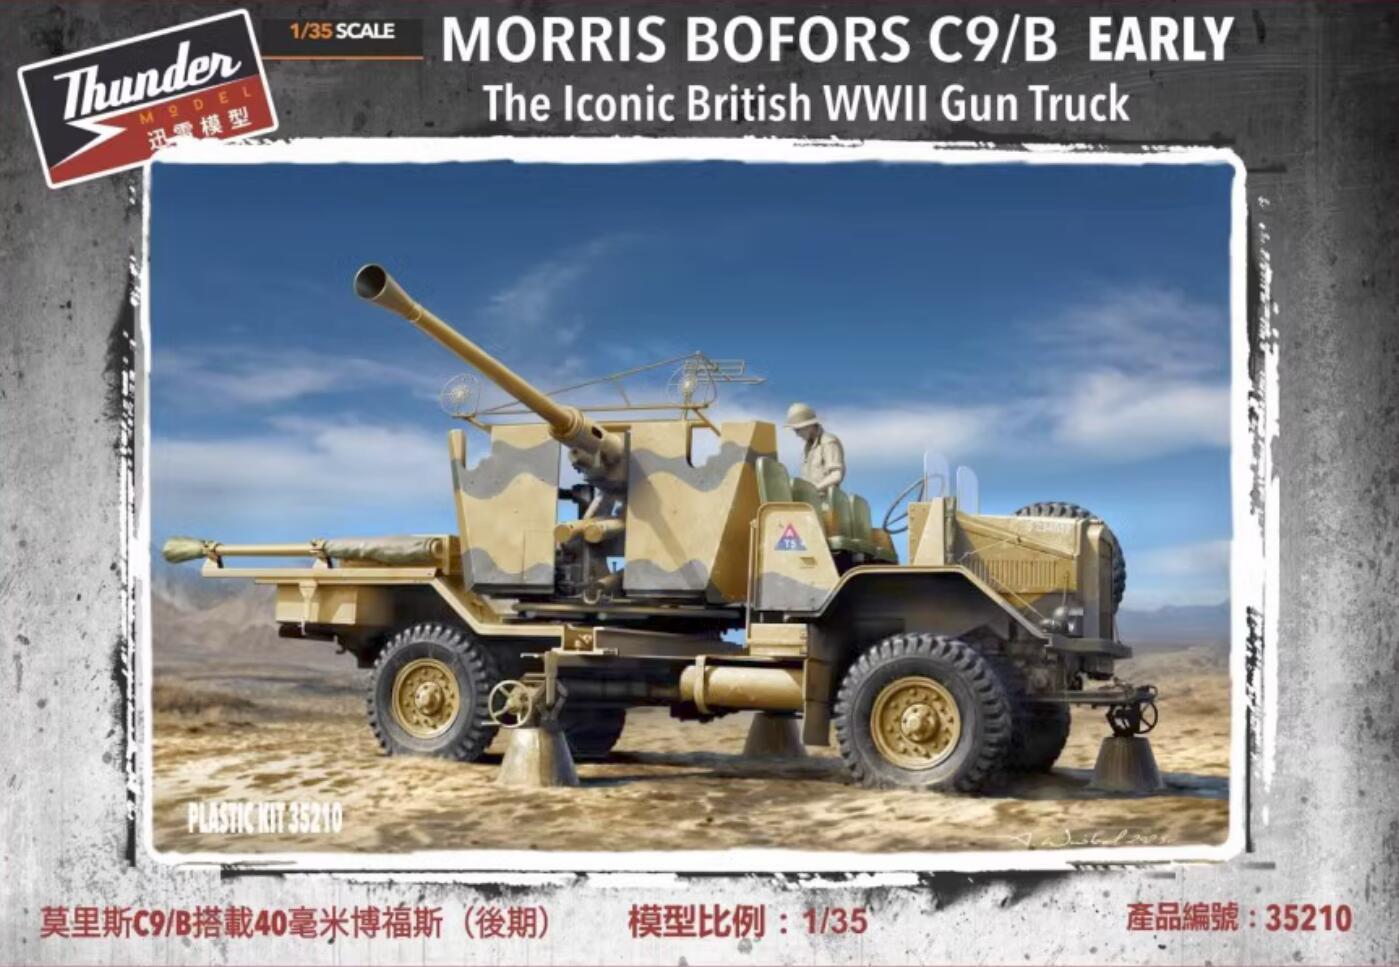 TM35210  техника и вооружение  British Morris Bofors C9/B Gun truck Early variant  (1:35)